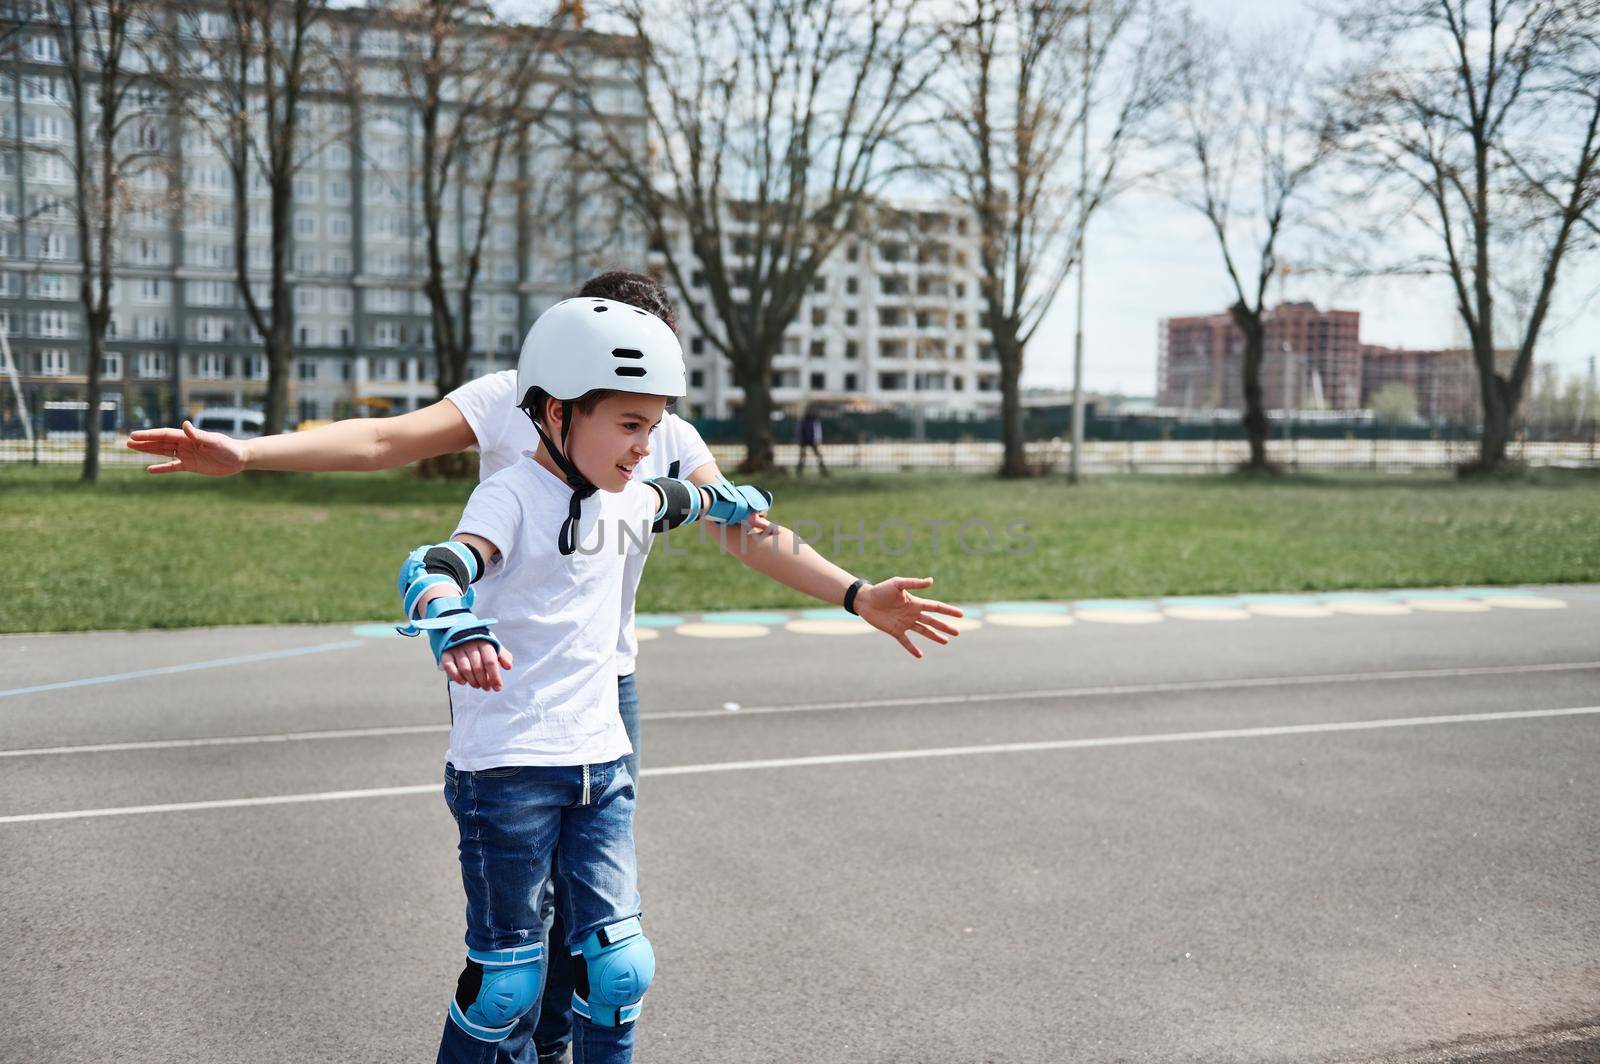 Adorable boy in a skateboard helmet and gear is riding a skateboard on the street by artgf